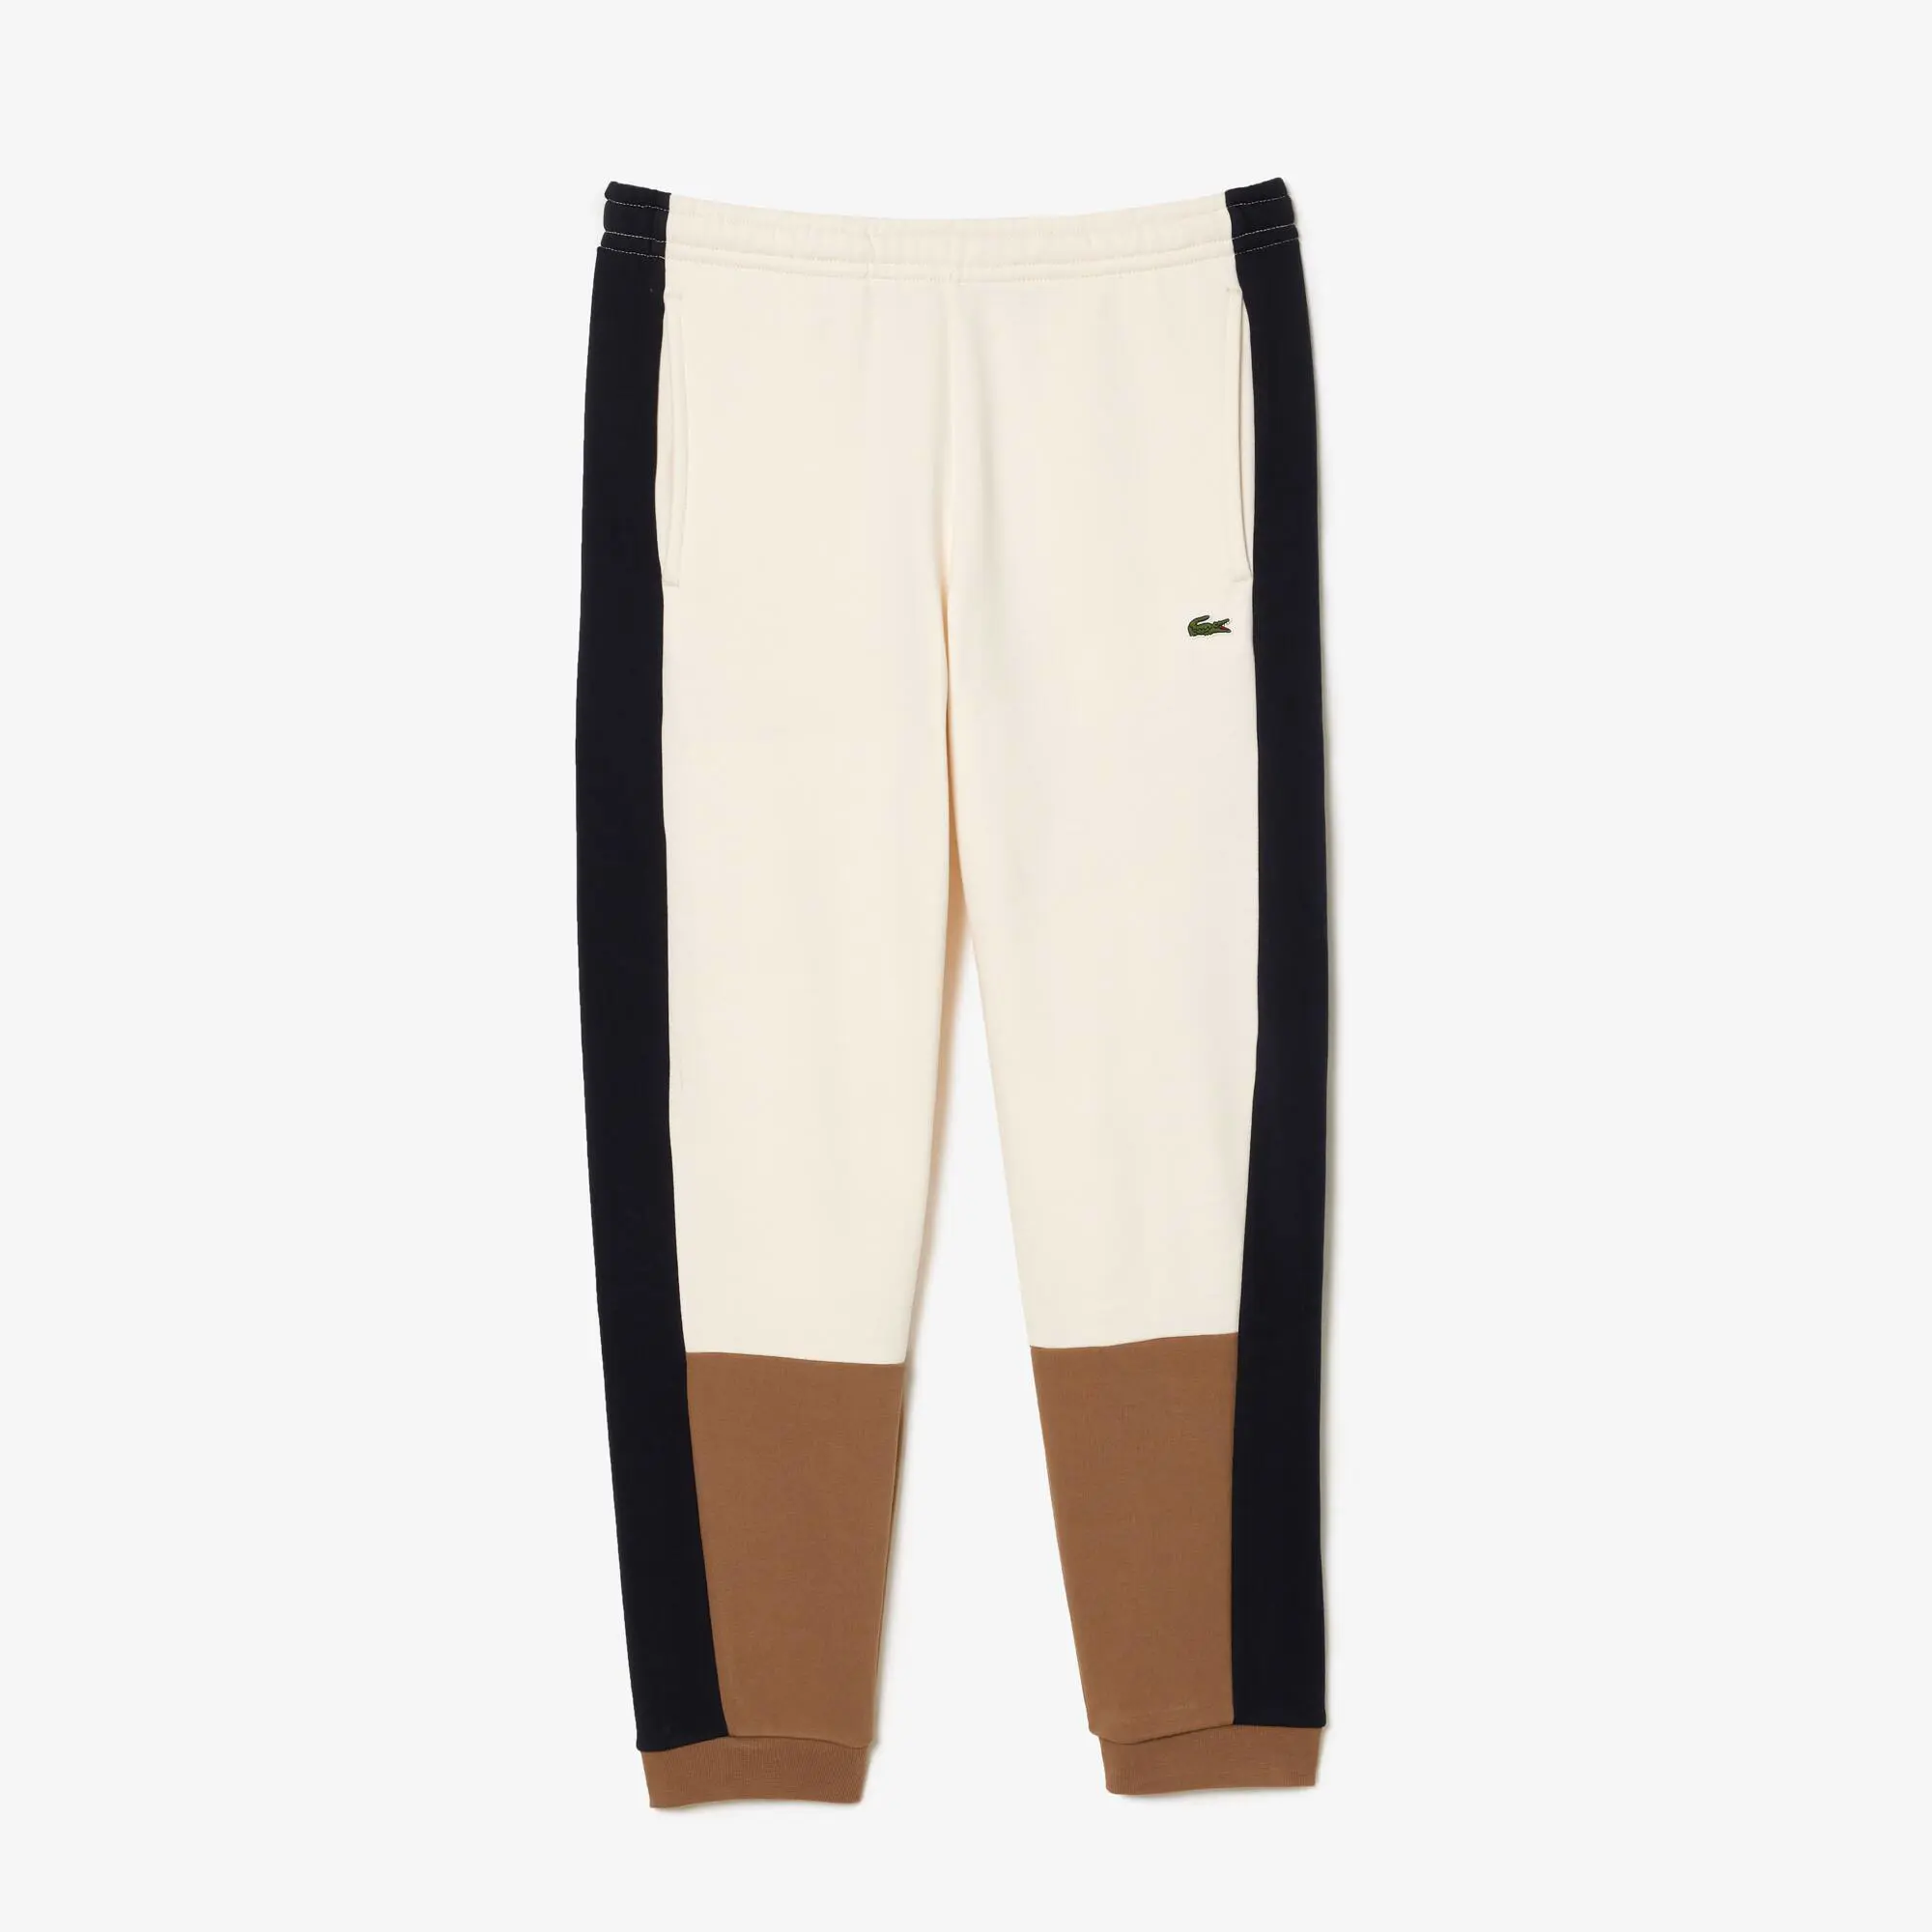 Lacoste Men's Regular Fit Colorblock Sweatpants. 2